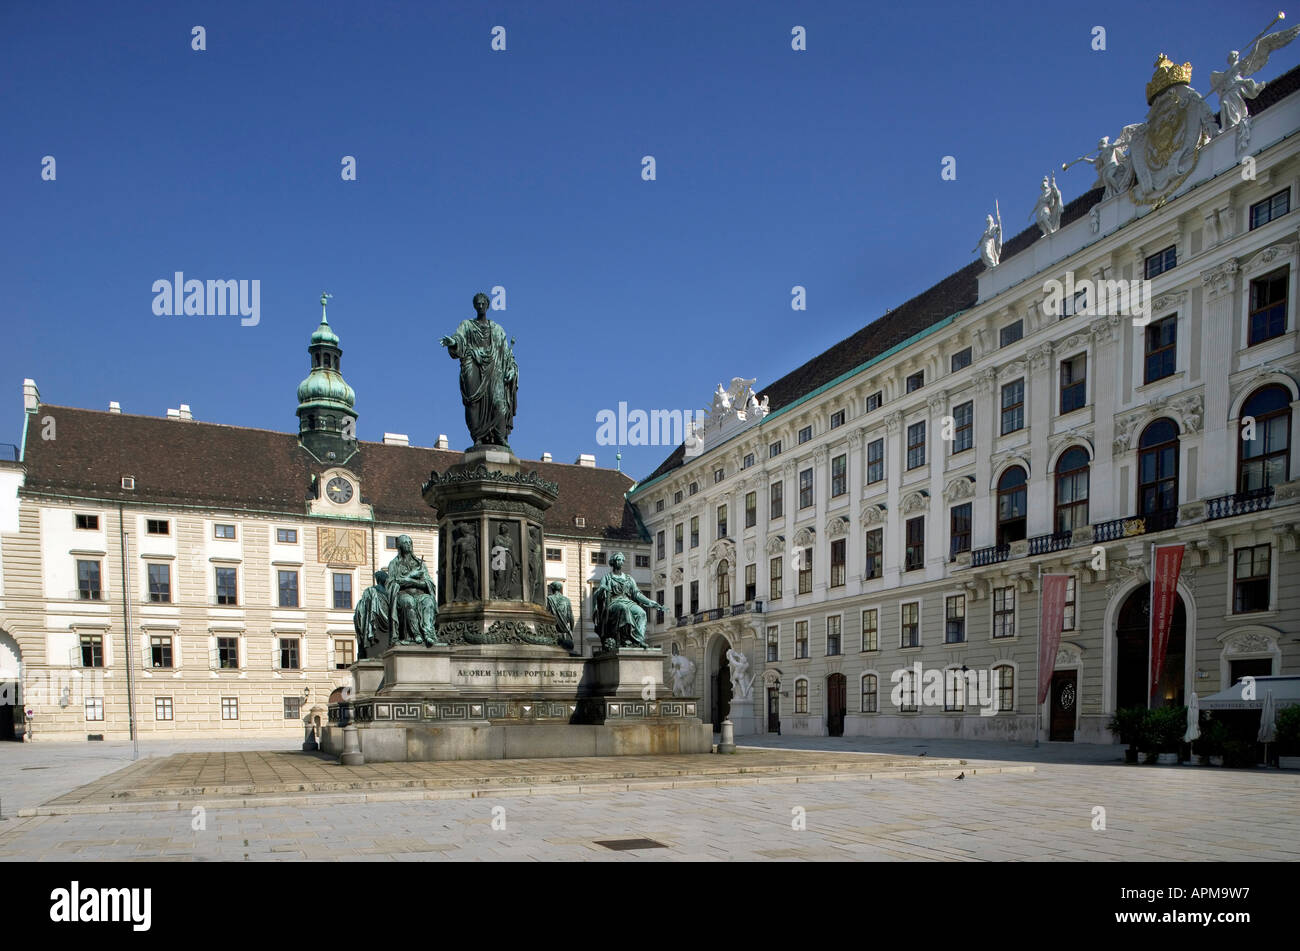 Austria, Vienna, exterior of The Old Castle Stock Photo